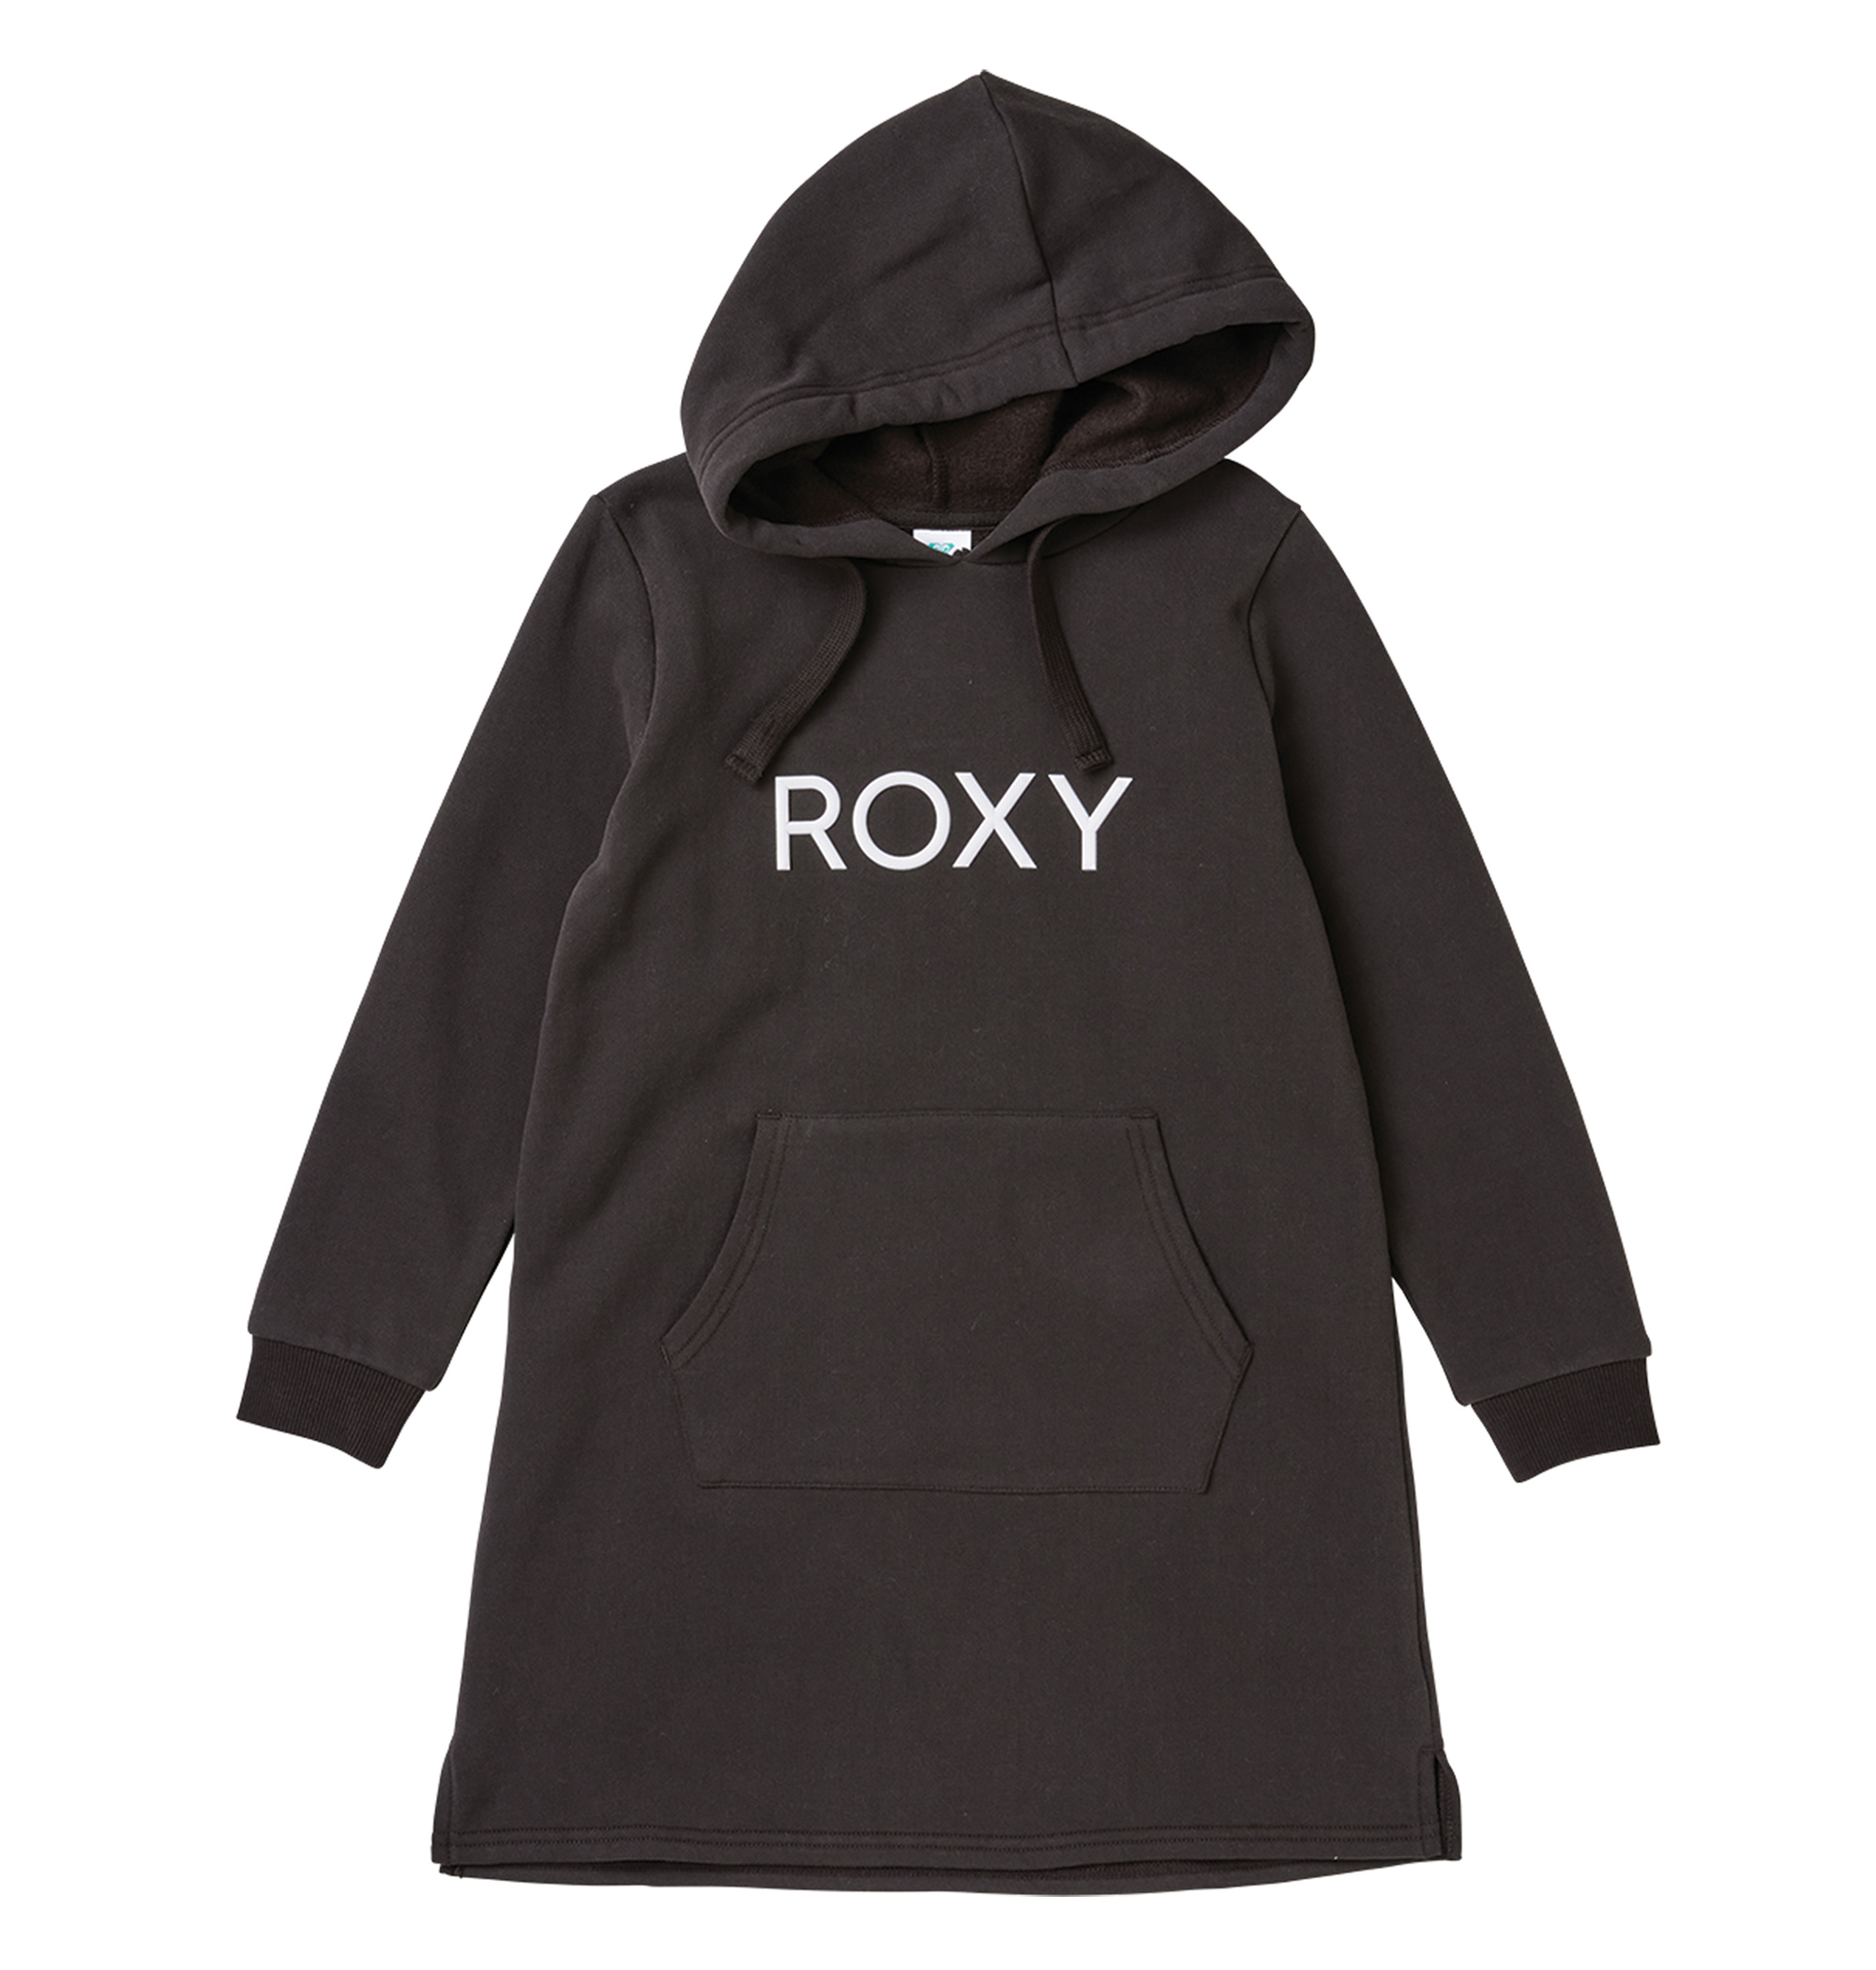 ＜Roxy＞MINI JIVY DRESS 胸元のブランドアイコンがキャッチーなフーディワンピース